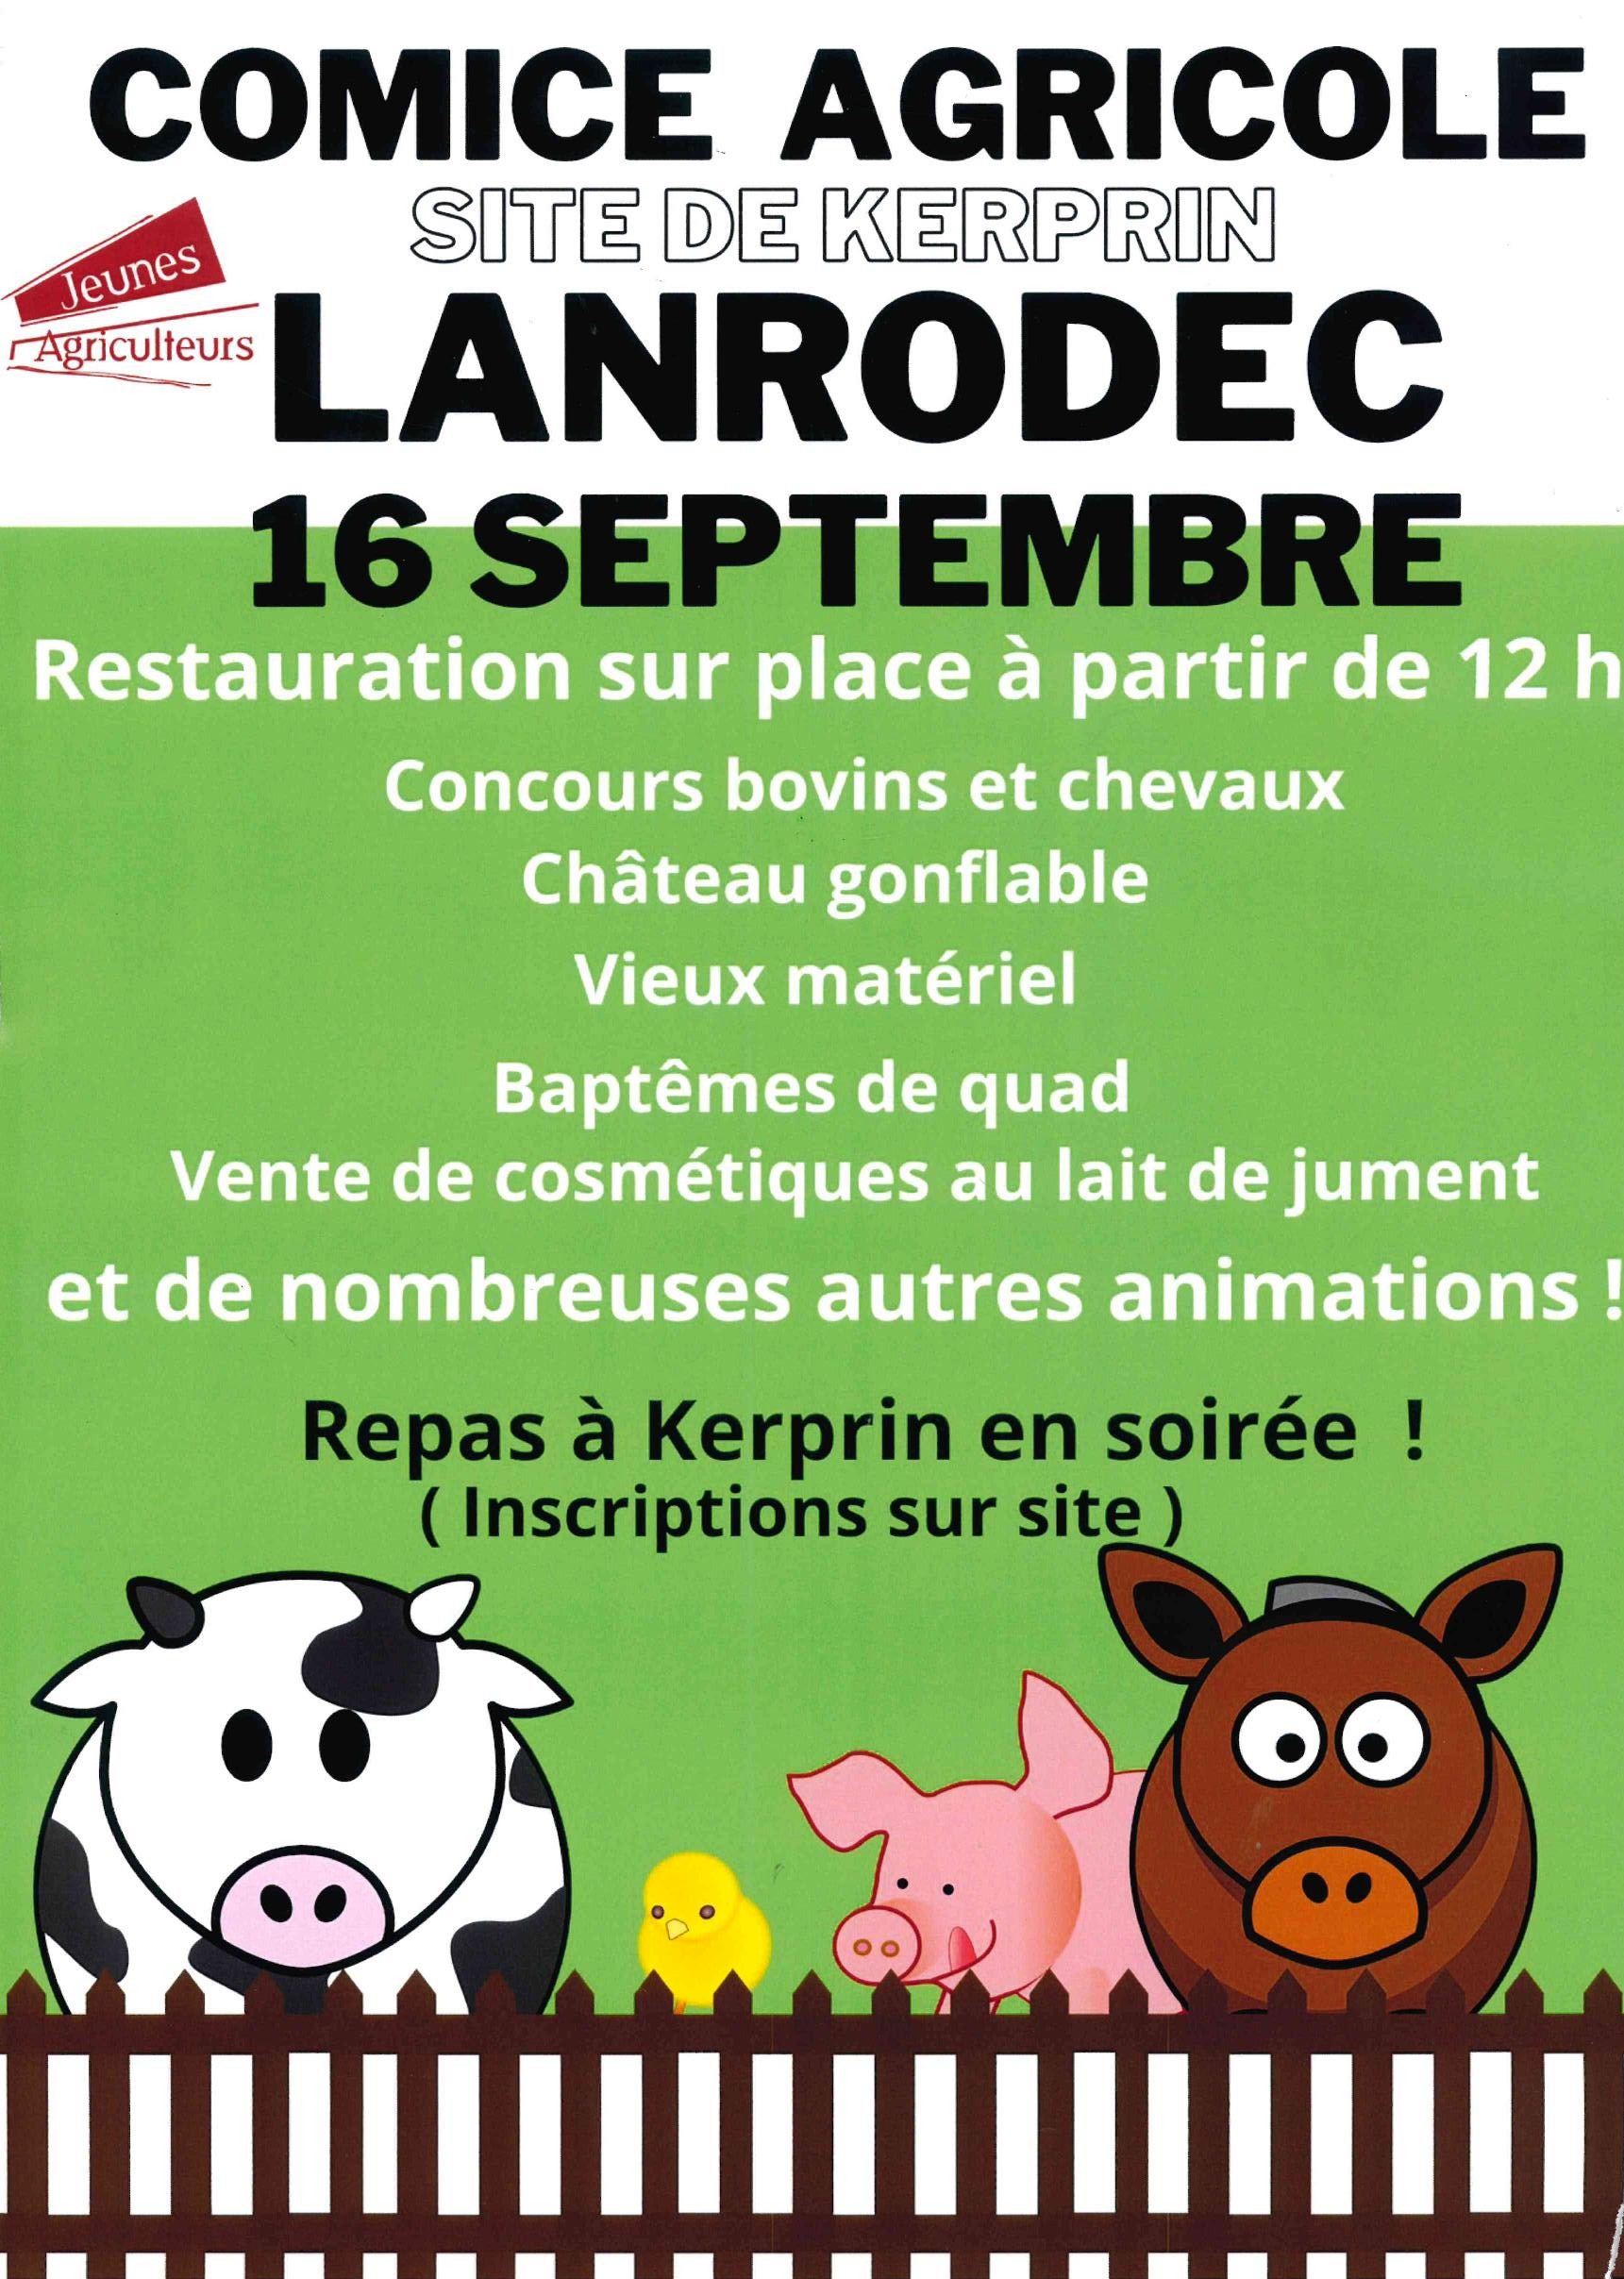 Comice Agricole-page-001.jpg